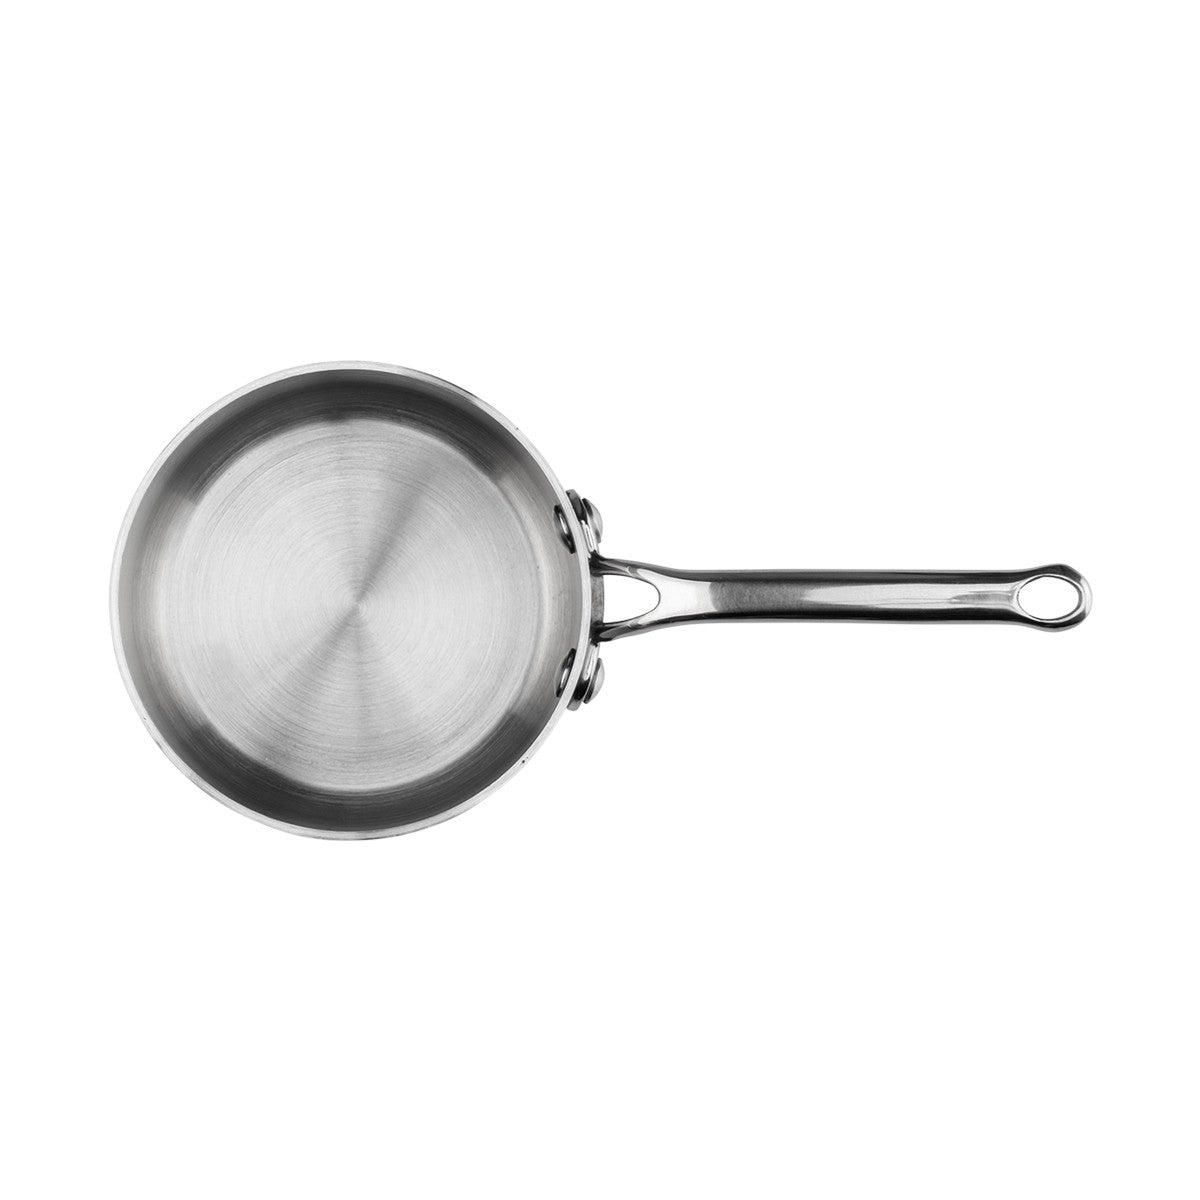 MINI SAUCE PAN 3-PLY 10x5 cm